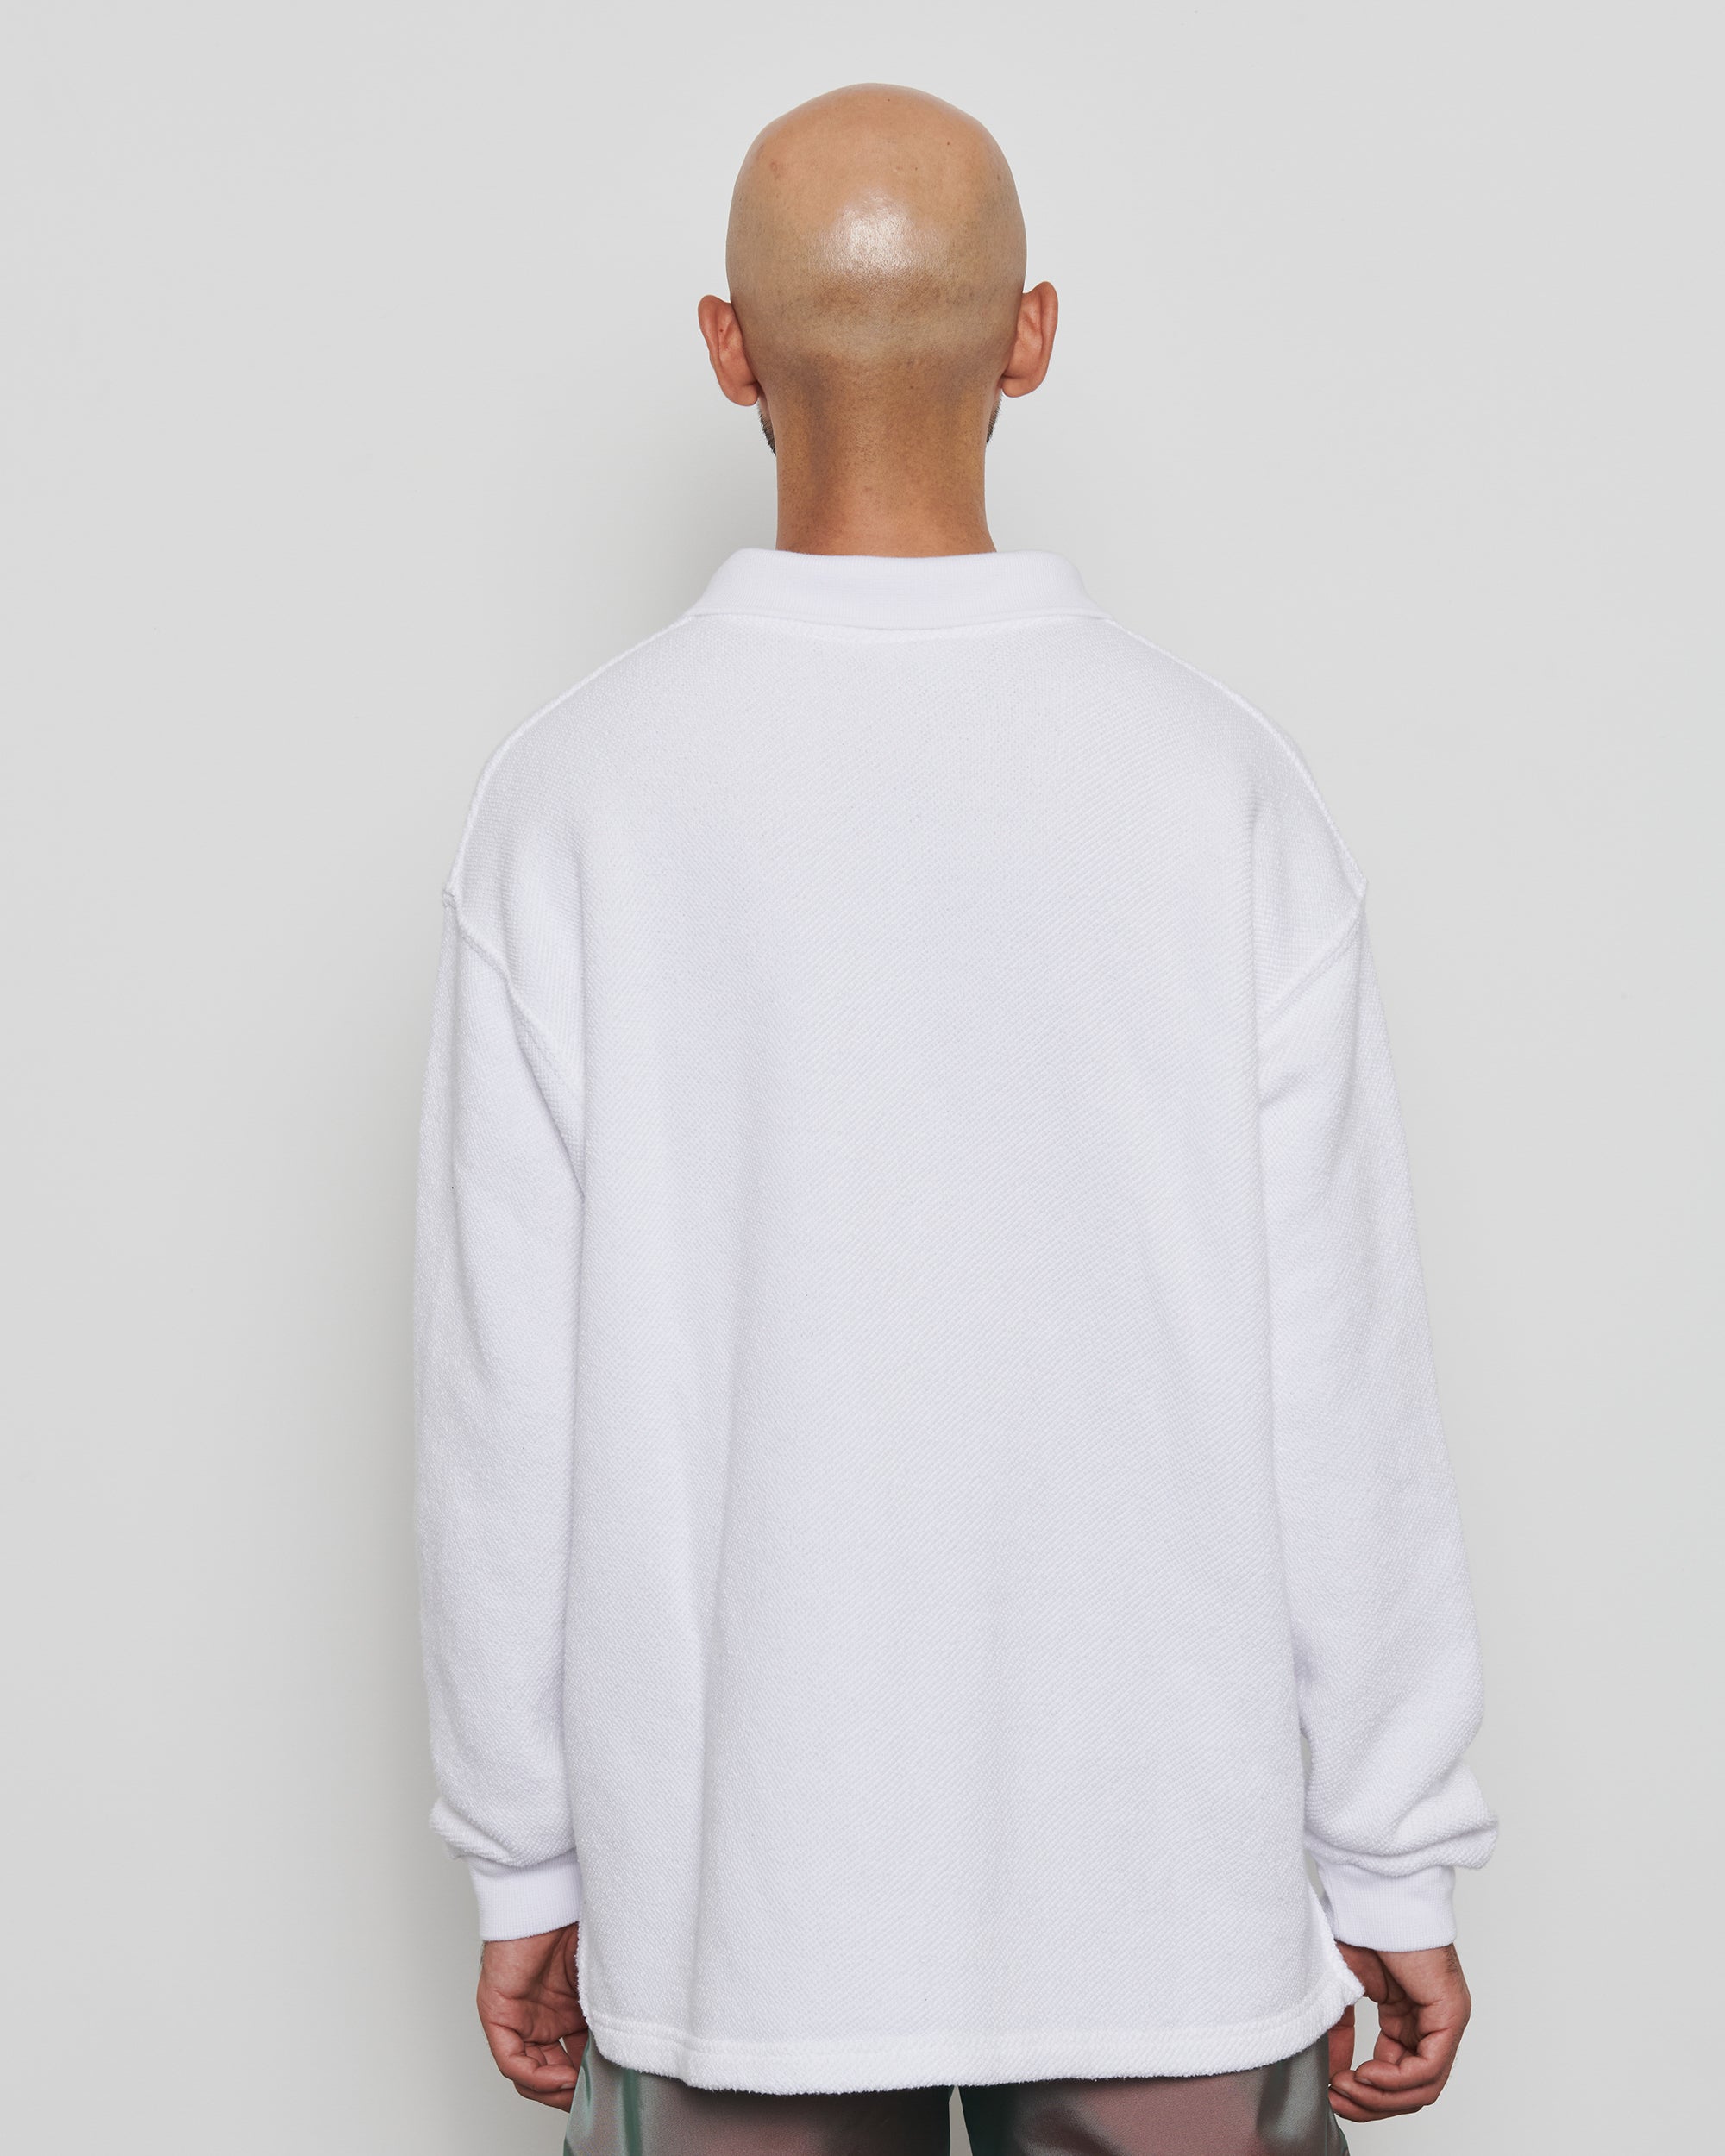 LS Polo Sweatshirt - White Pique Fleece